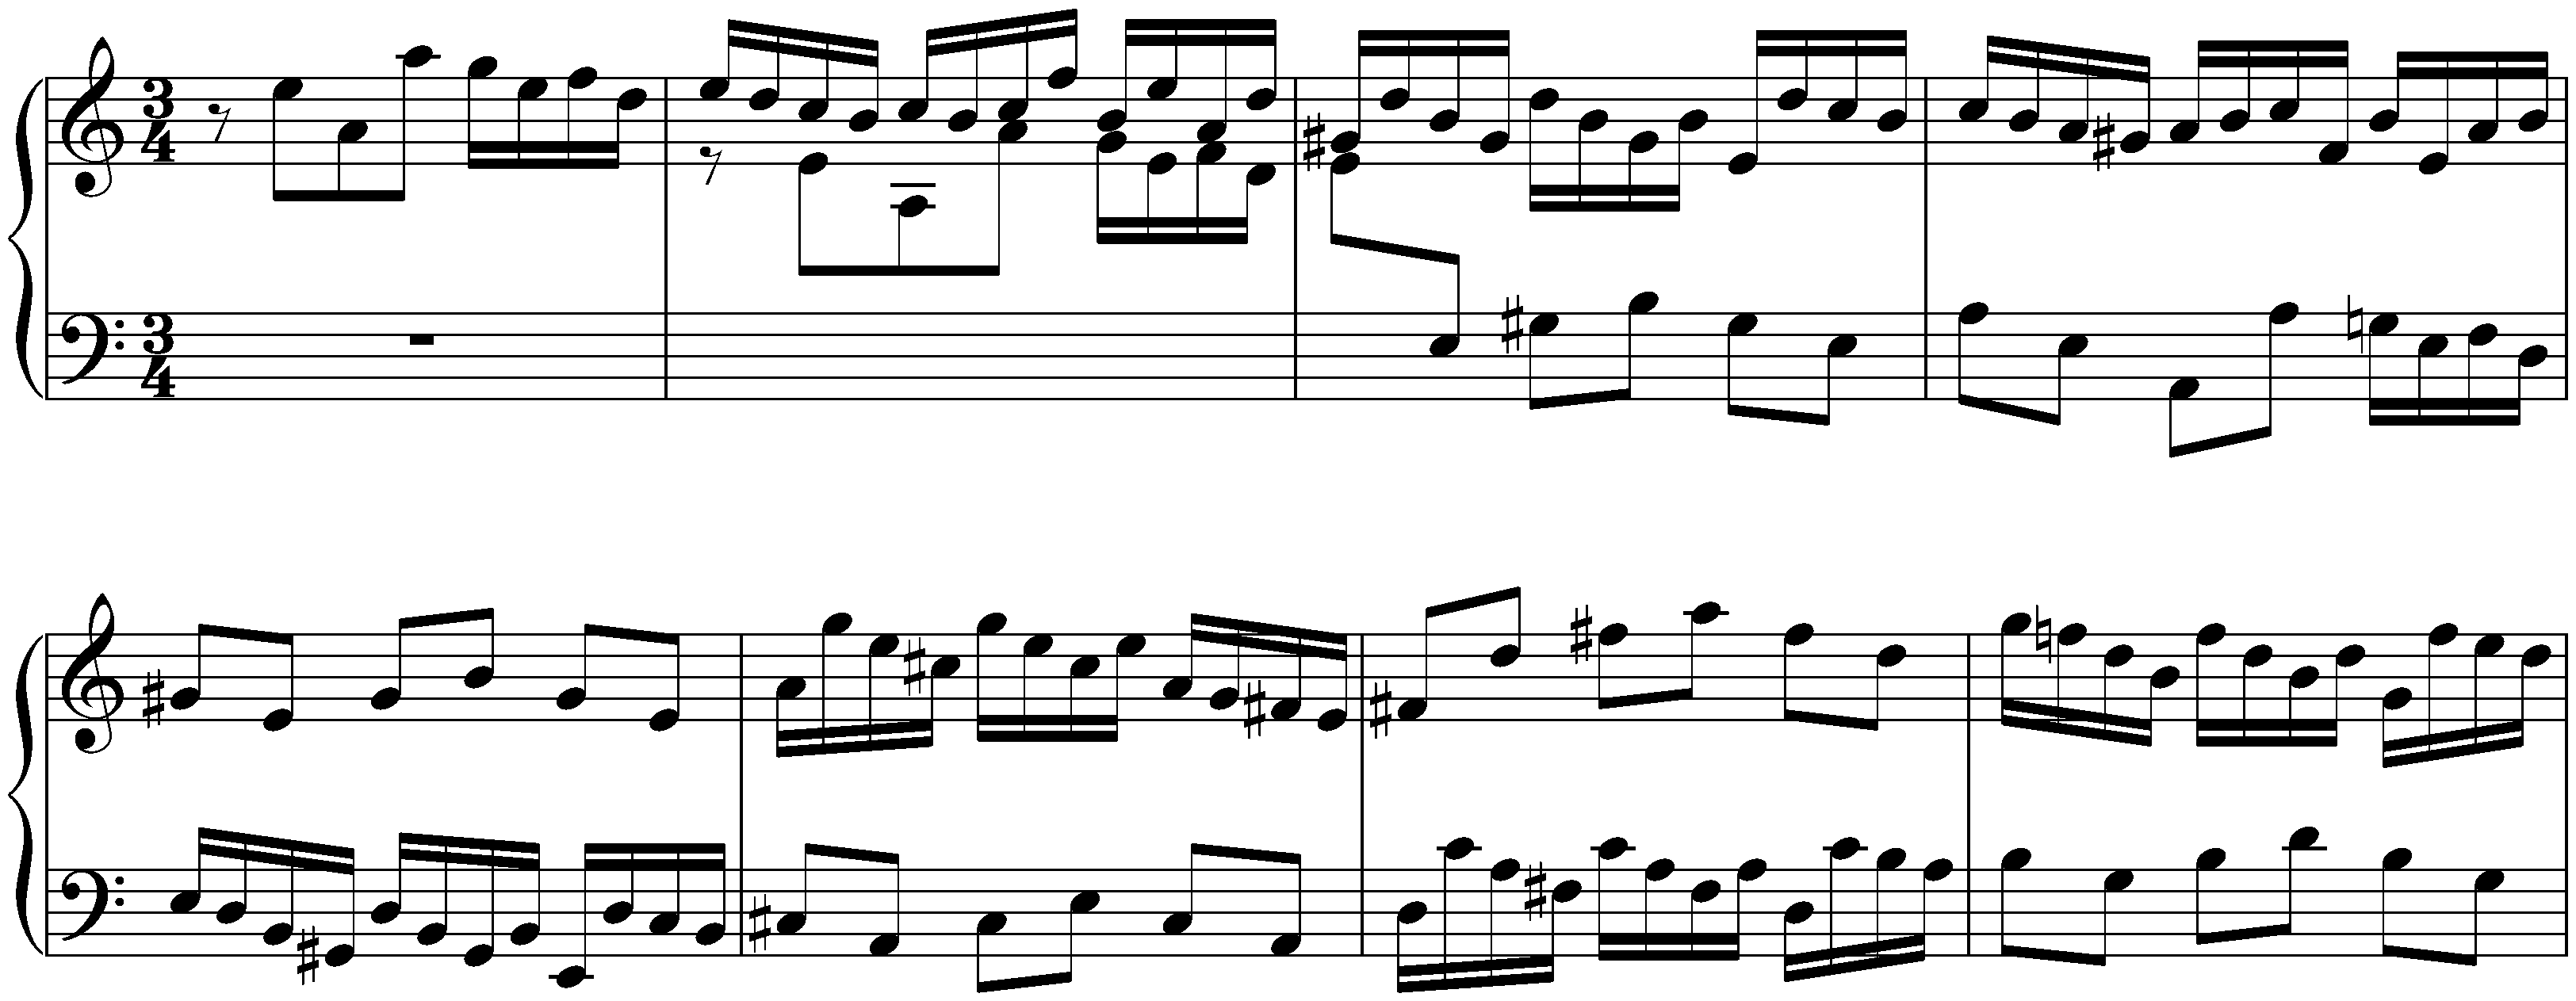 English Suite no. 2 in A minor, BWV 807; 1. Prélude